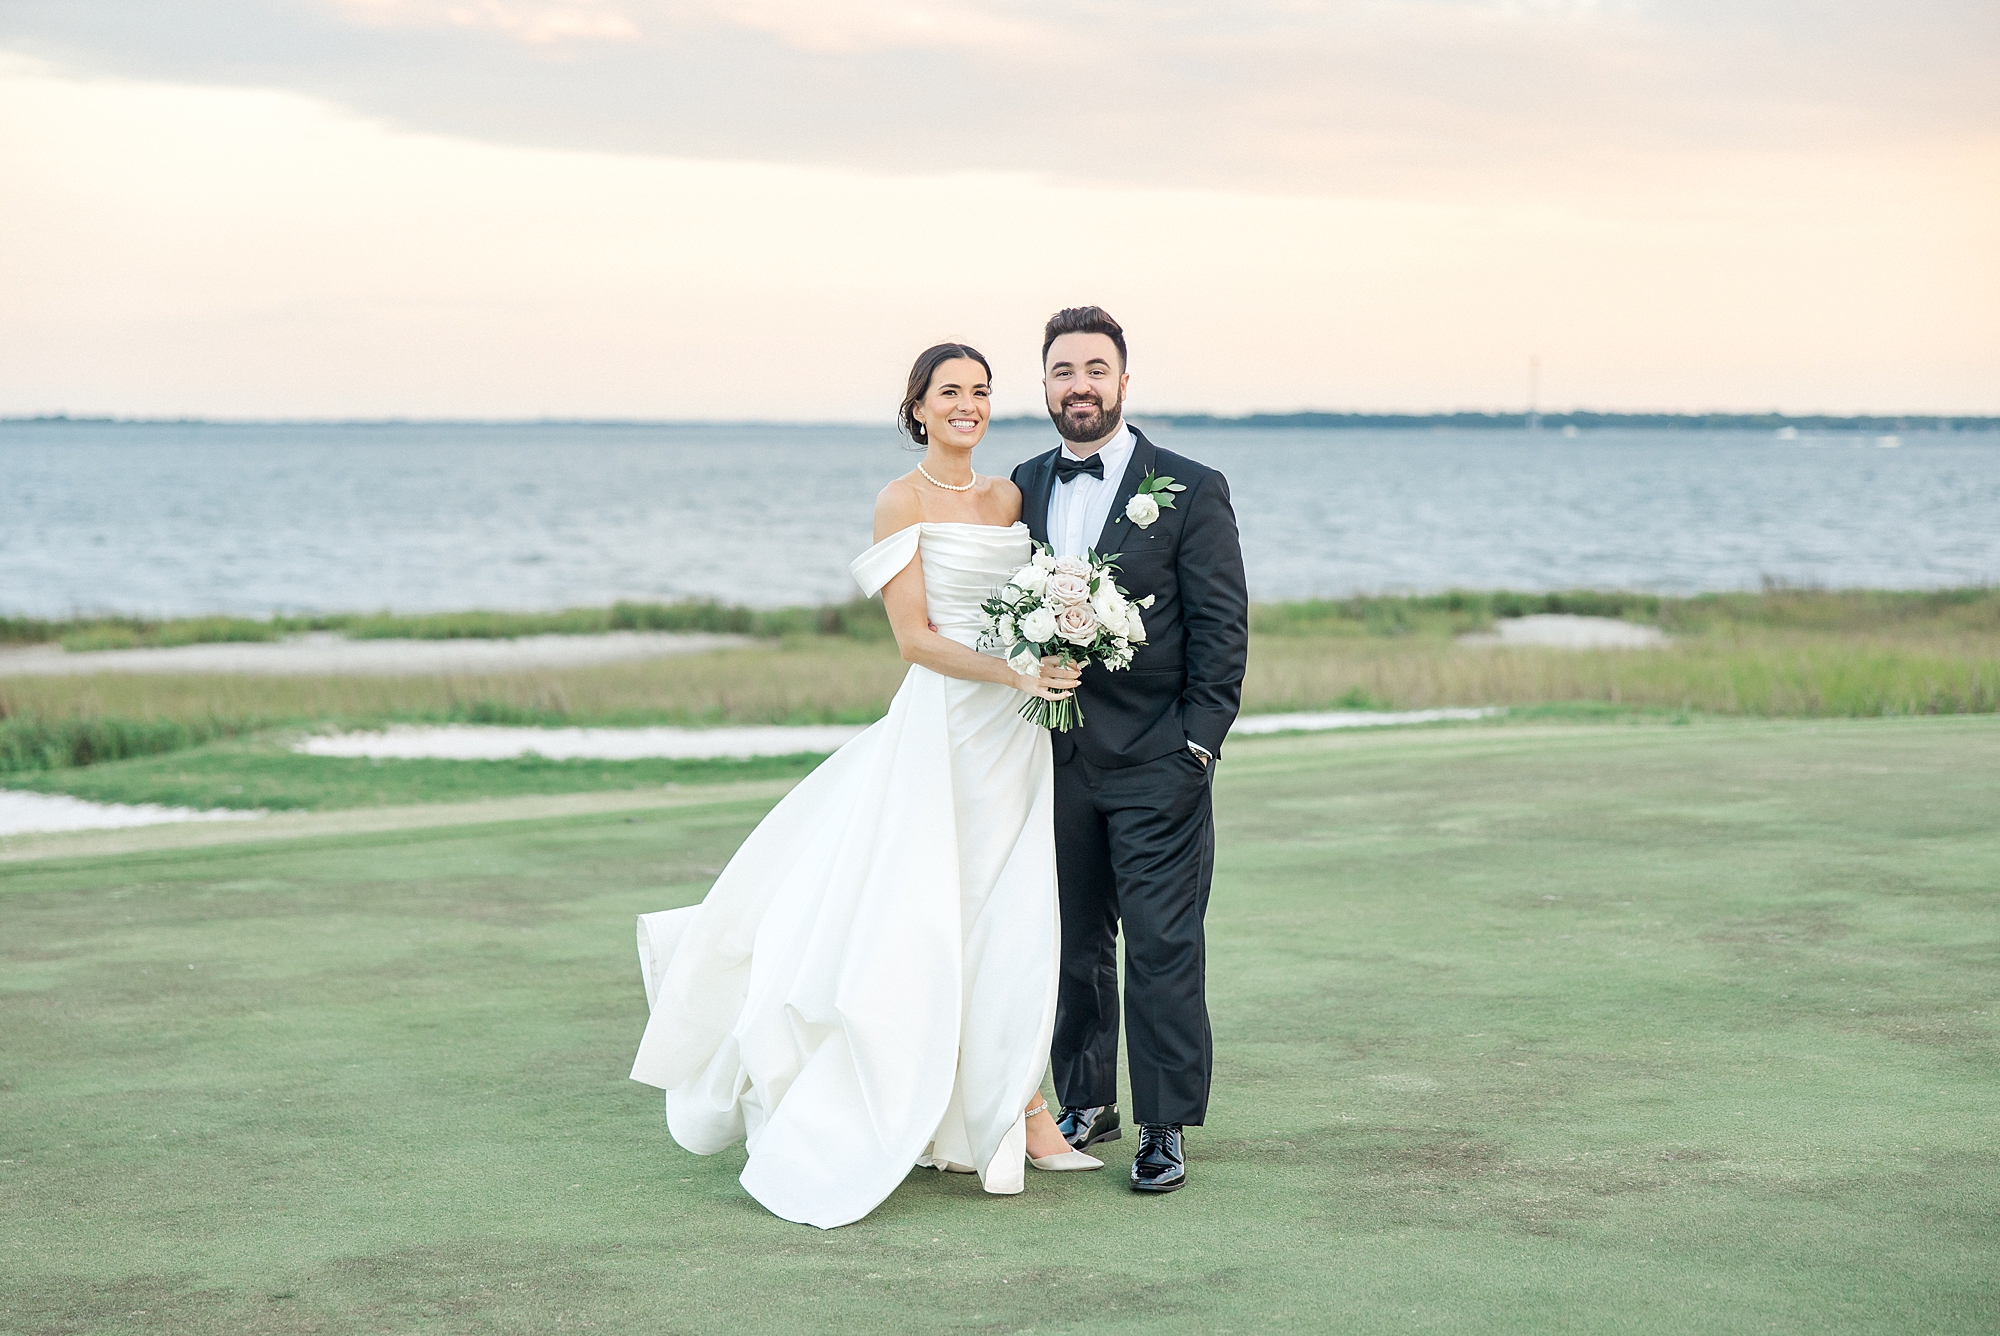 sunset wedding portraits from Charleston wedding at Patriots Point Links